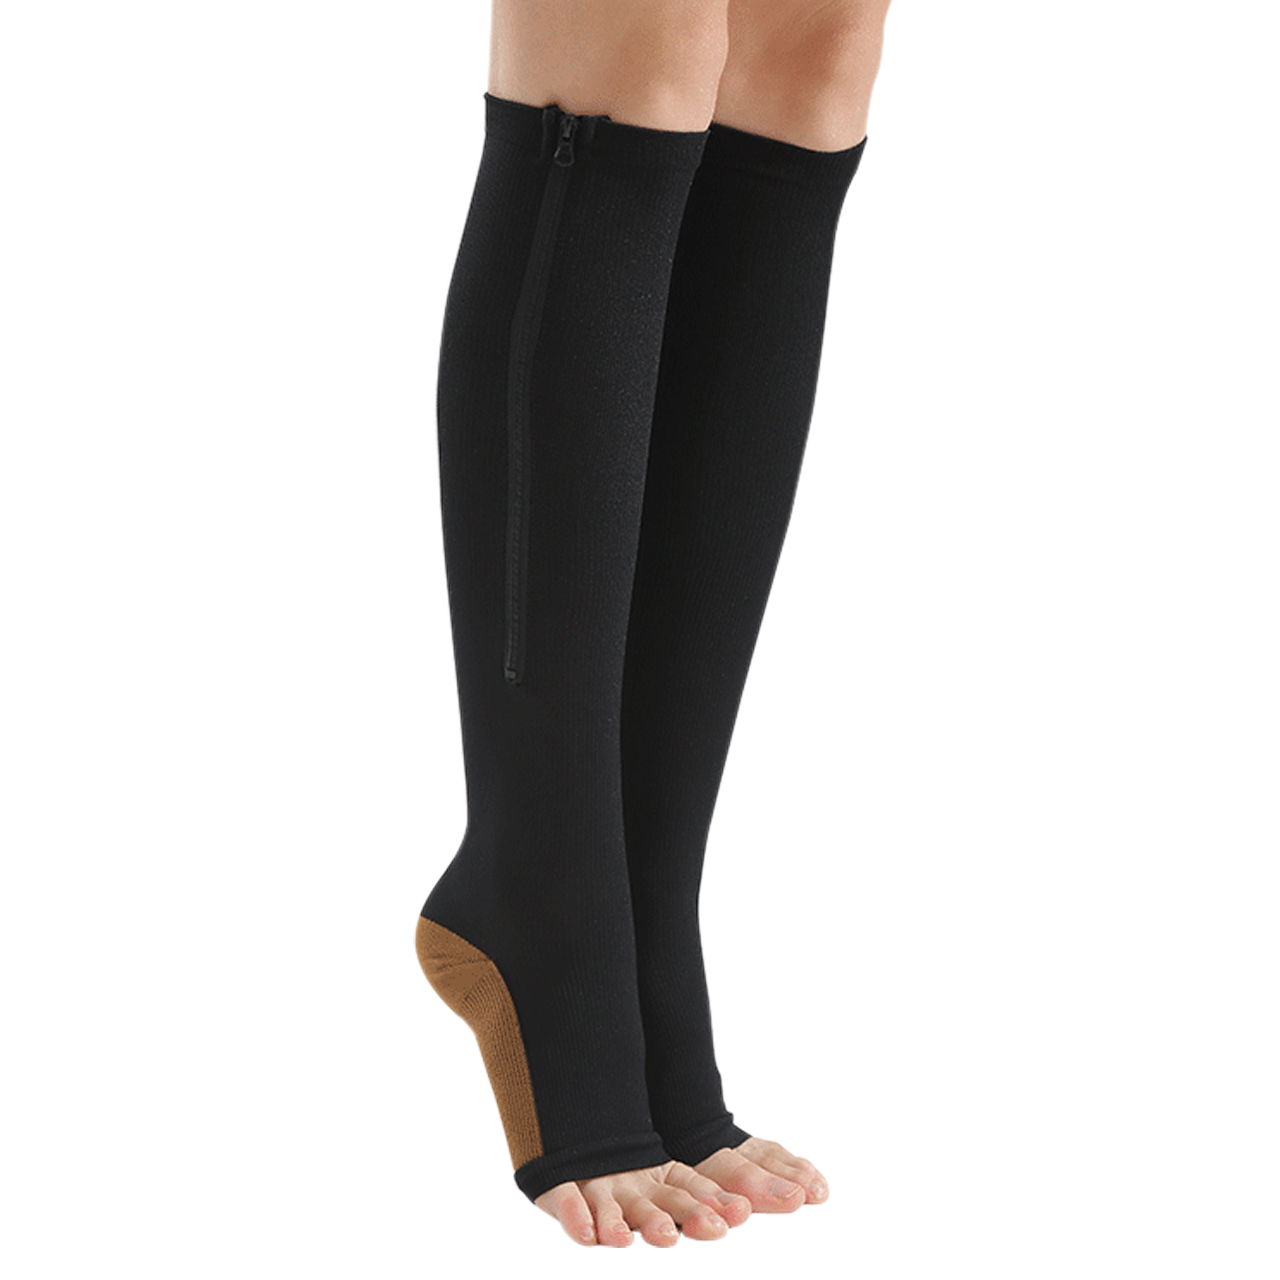 Zipper Compression Copper Socks Foot Support Graduated Zip Stockings ...